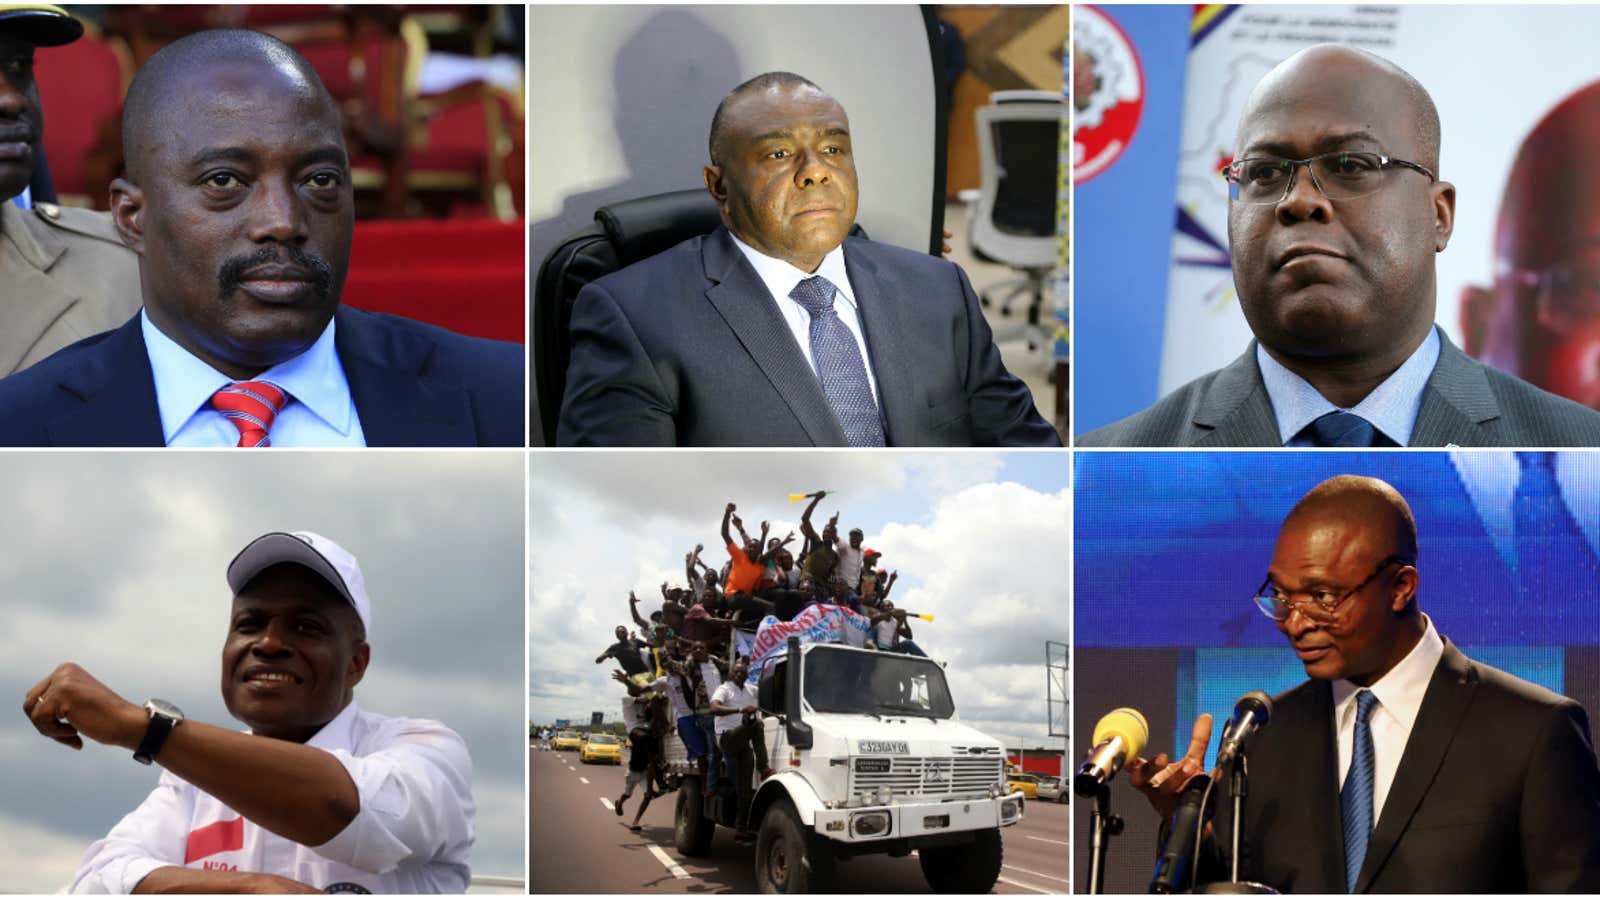 Top L-R: president Joseph Kabila; Jean-Pierre Bemba, Felix Tshisekedi,opposition.
Bottom L-R: Martin Fayulu; Supporters; ruling party candidate, Emmanuel Ramazani Shadary